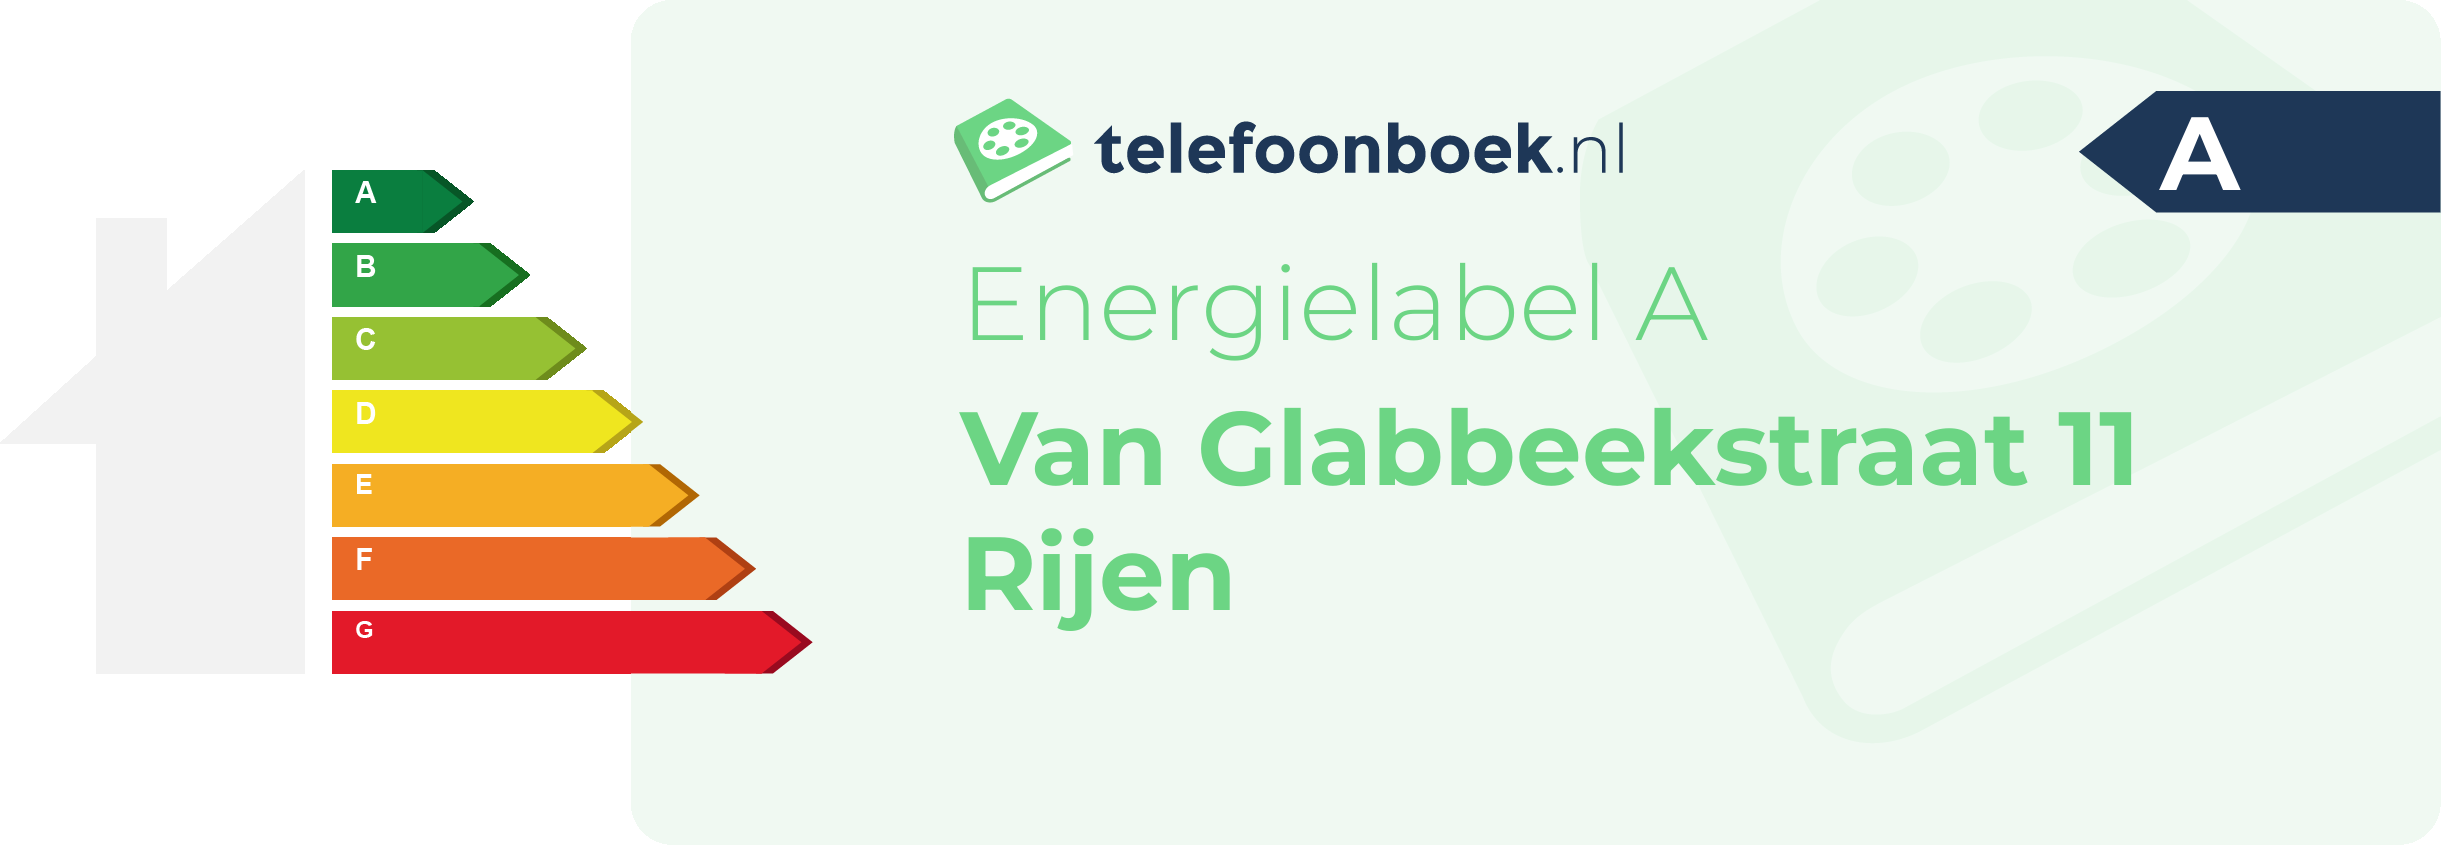 Energielabel Van Glabbeekstraat 11 Rijen